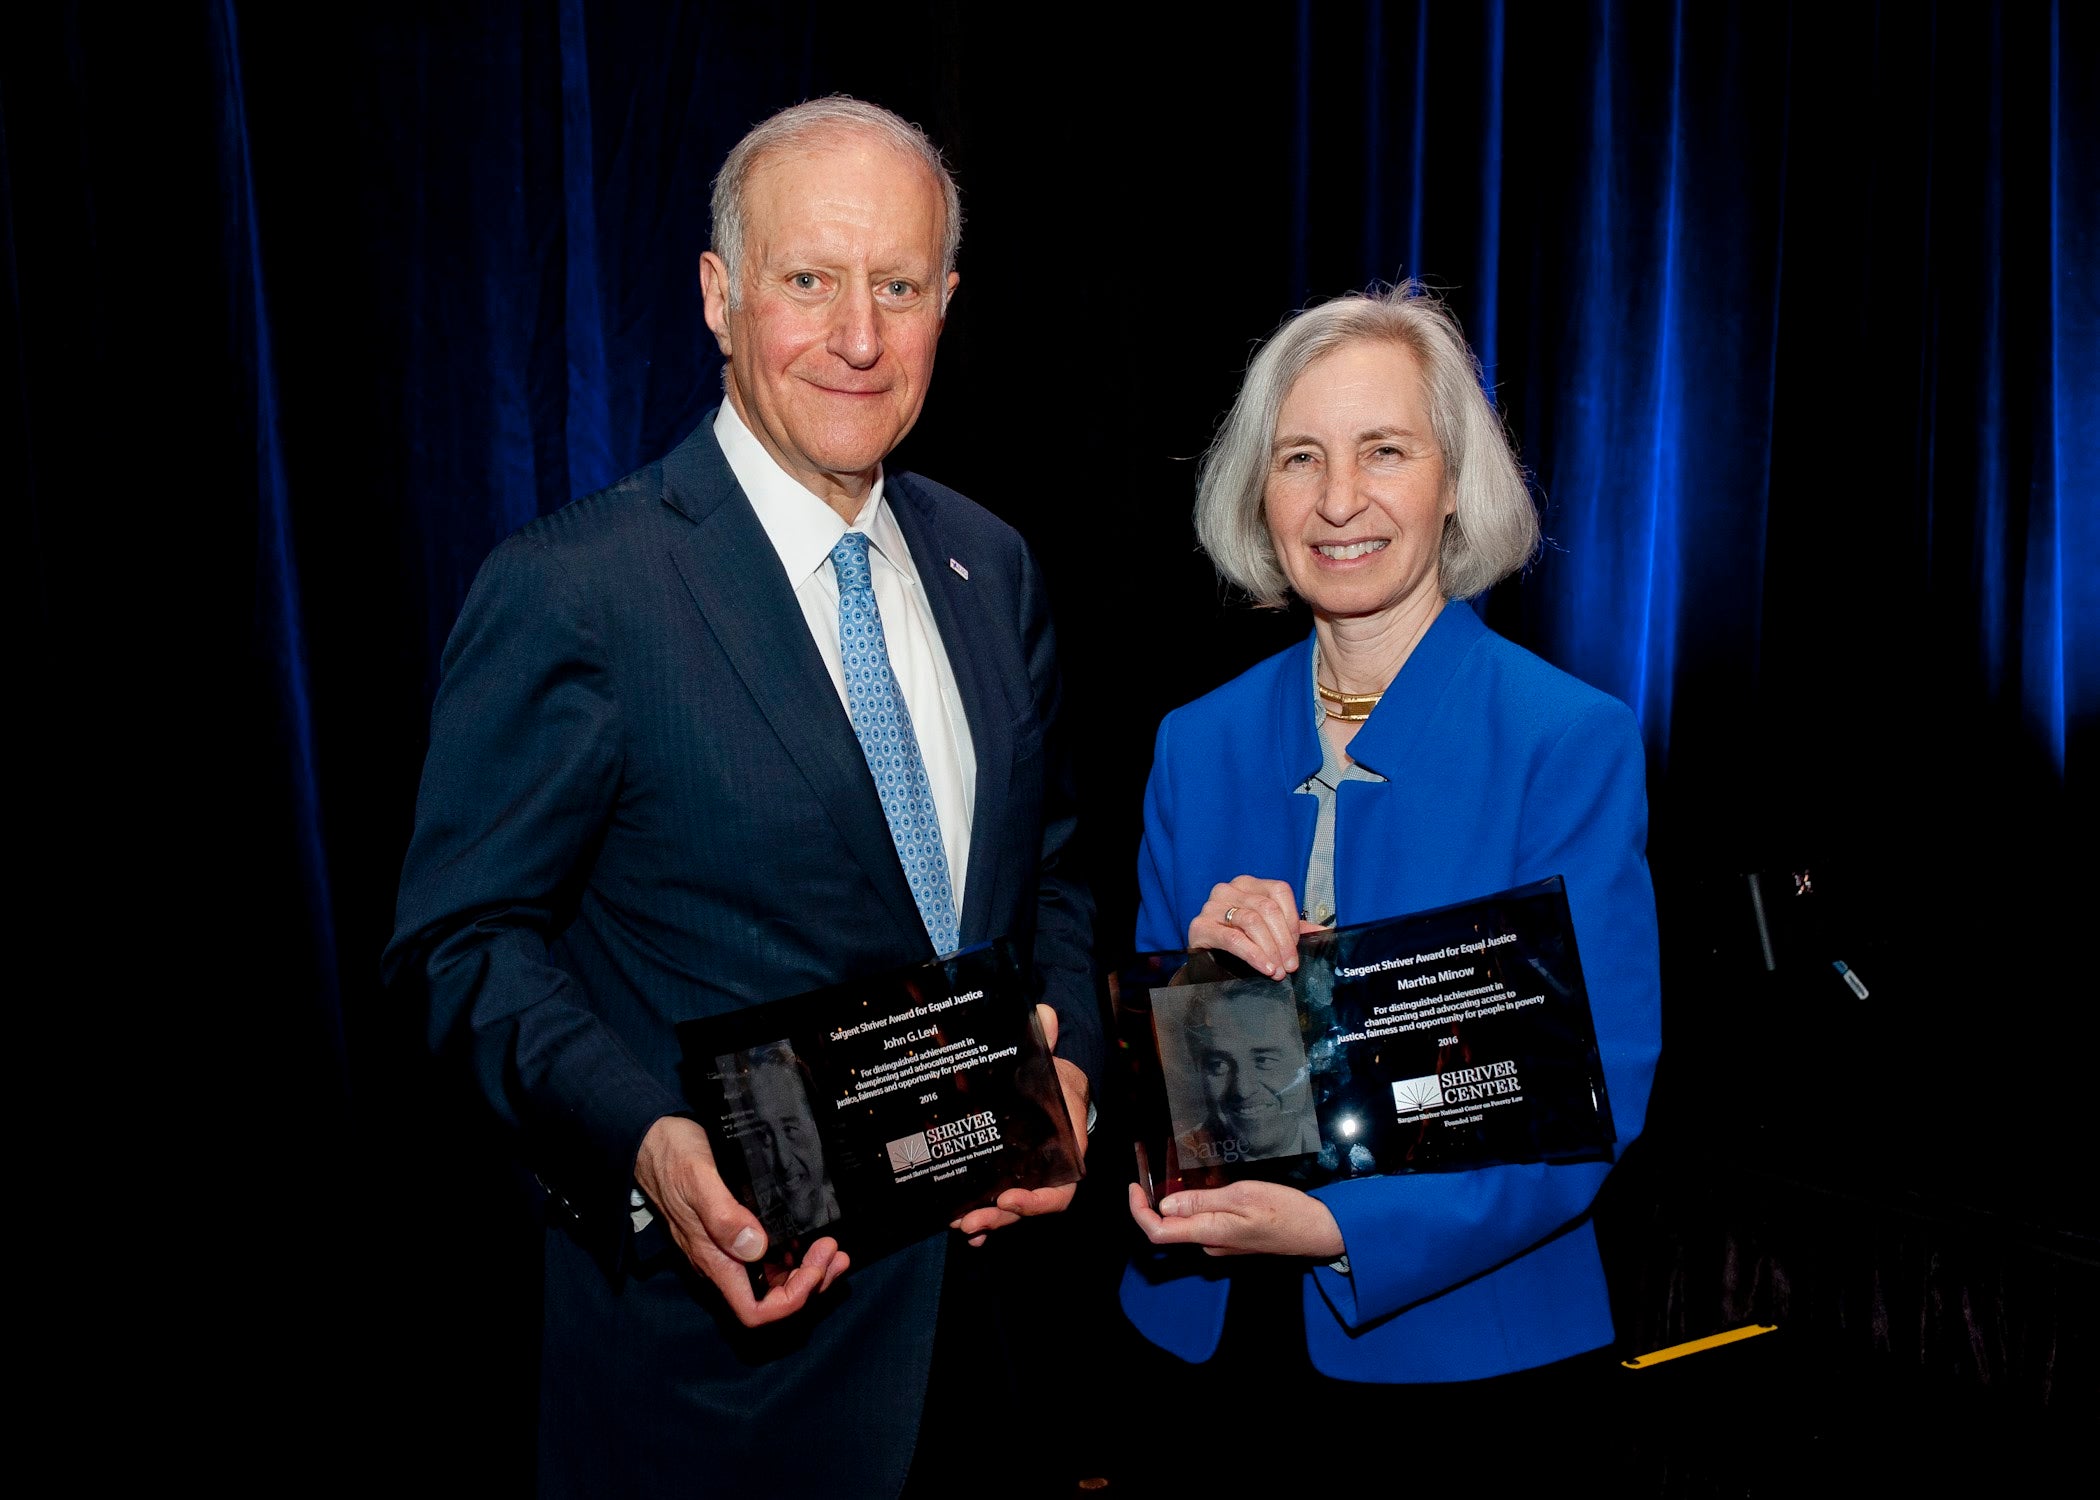 John Levi and Martha Minow posing together holding awards